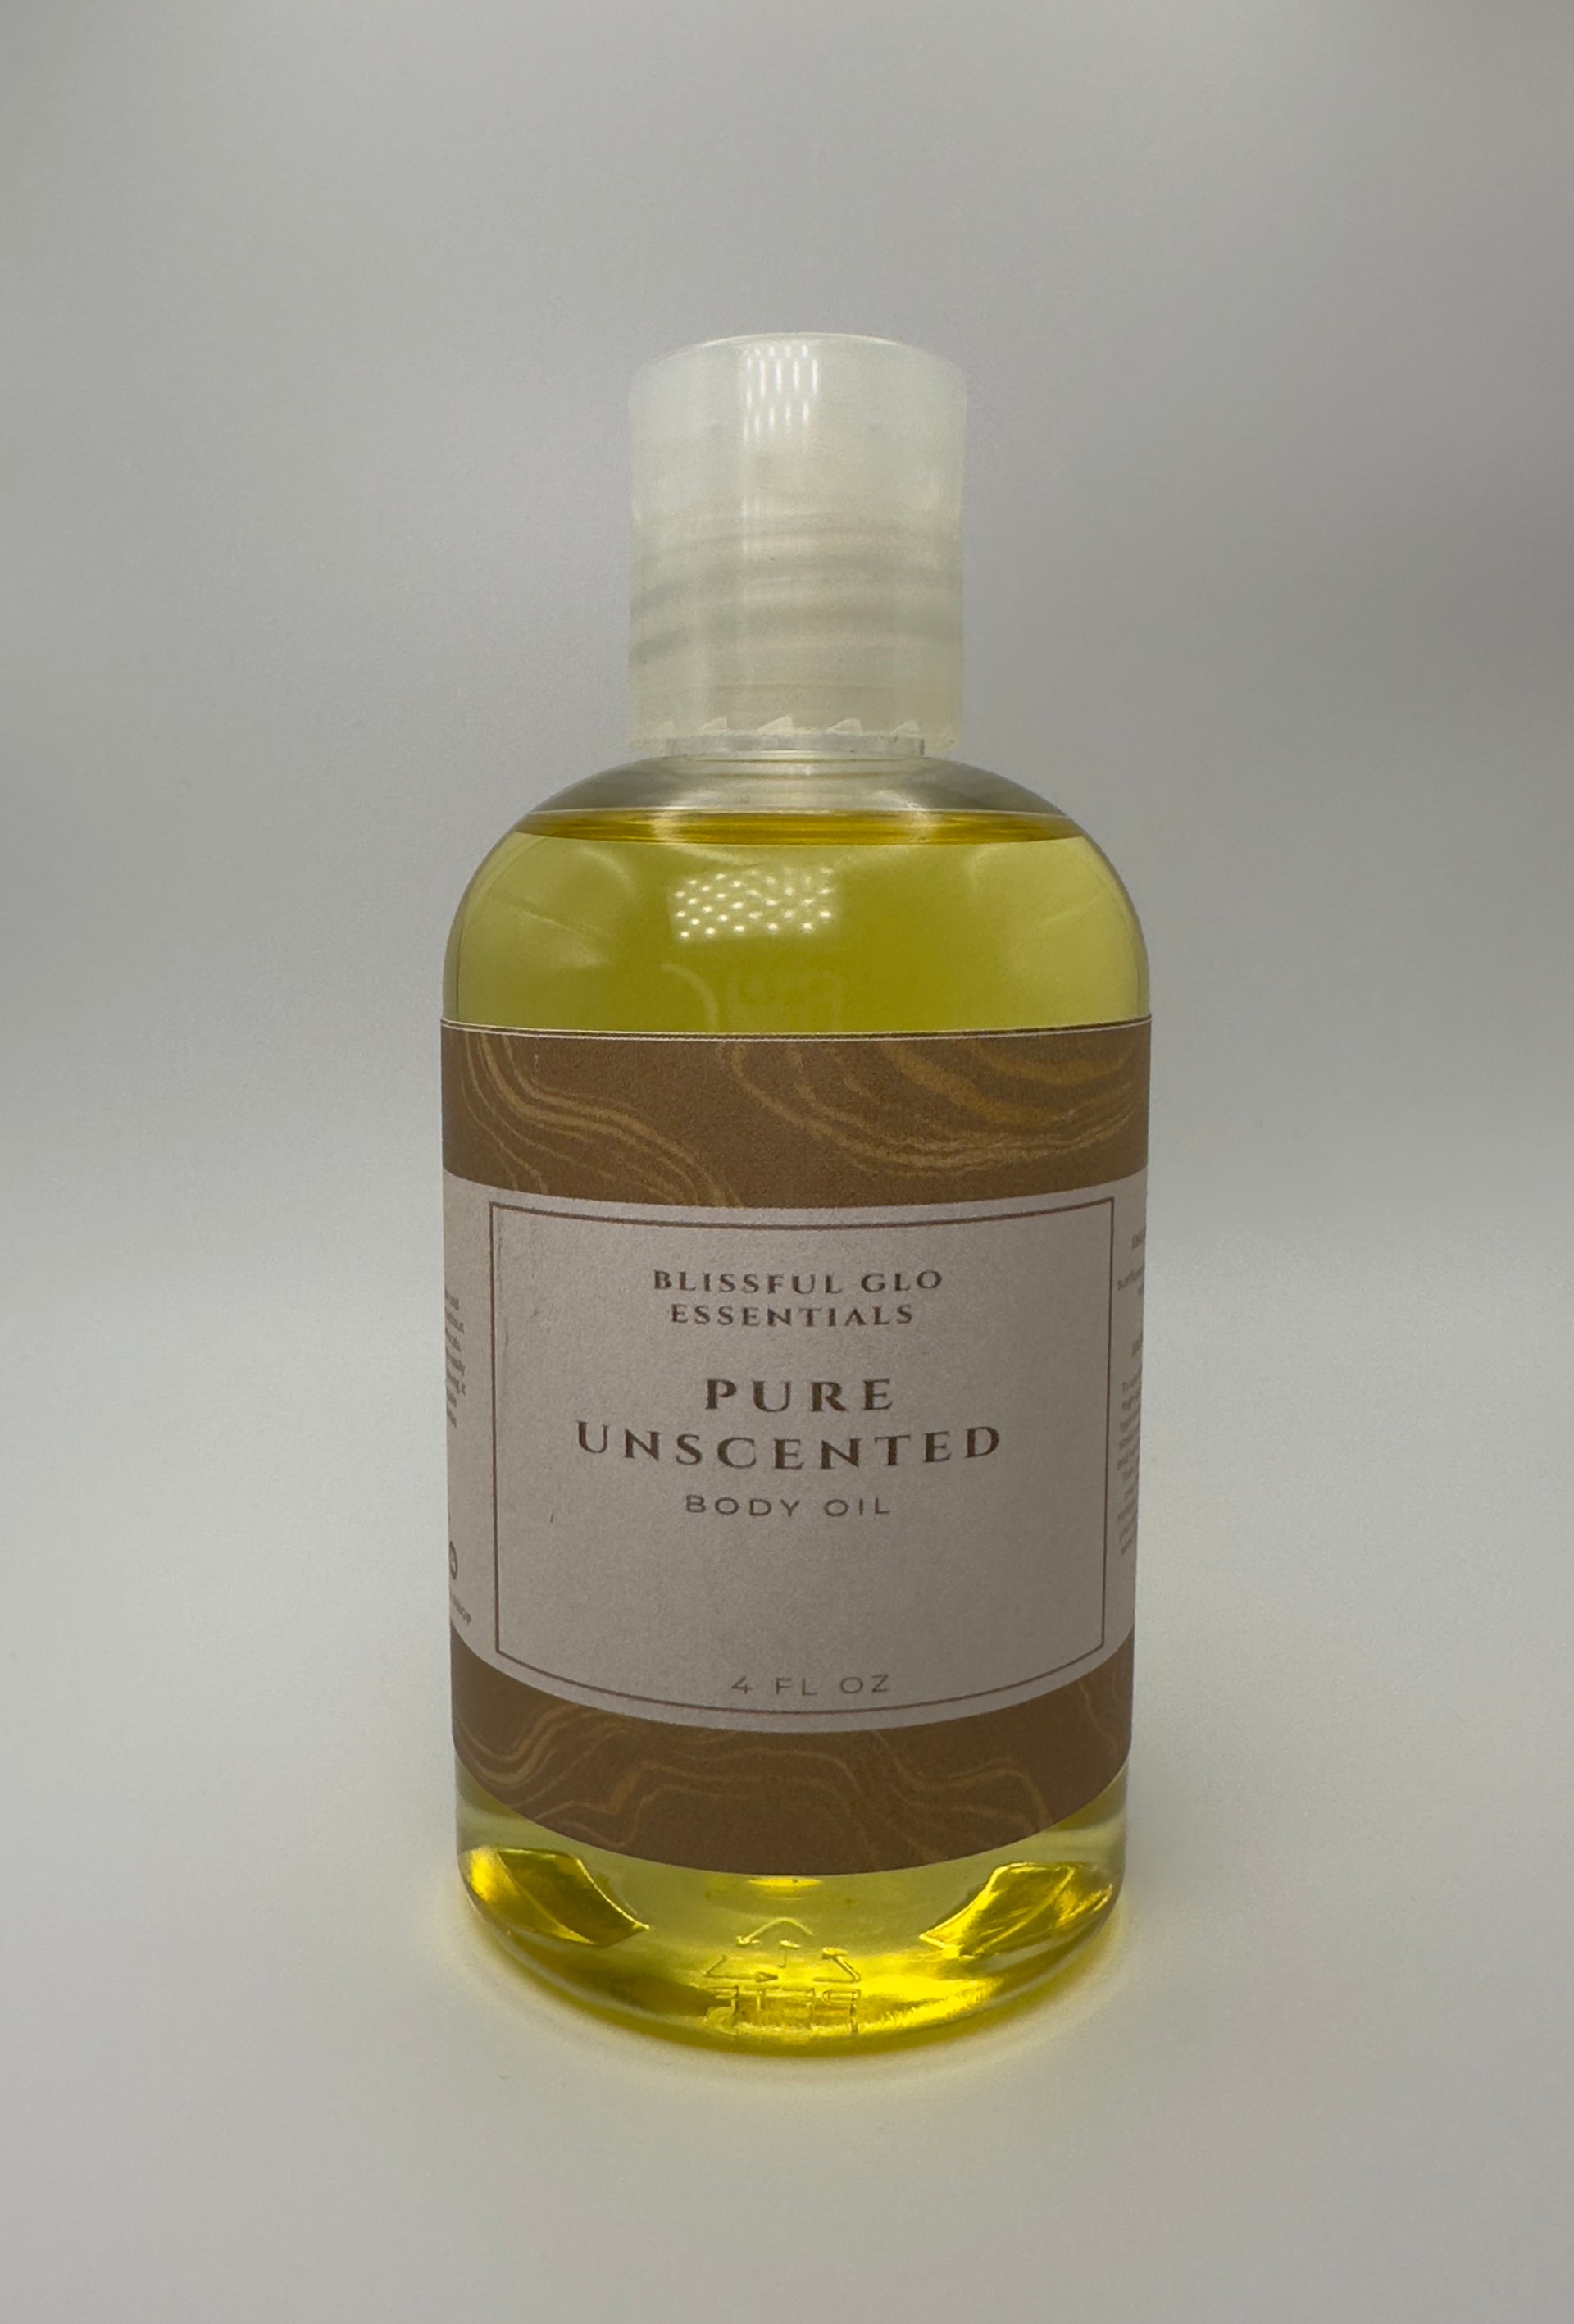 Unscented Body Oil / Ultra Moisturizing / Premium Blend #09 by pureSCRUBS®